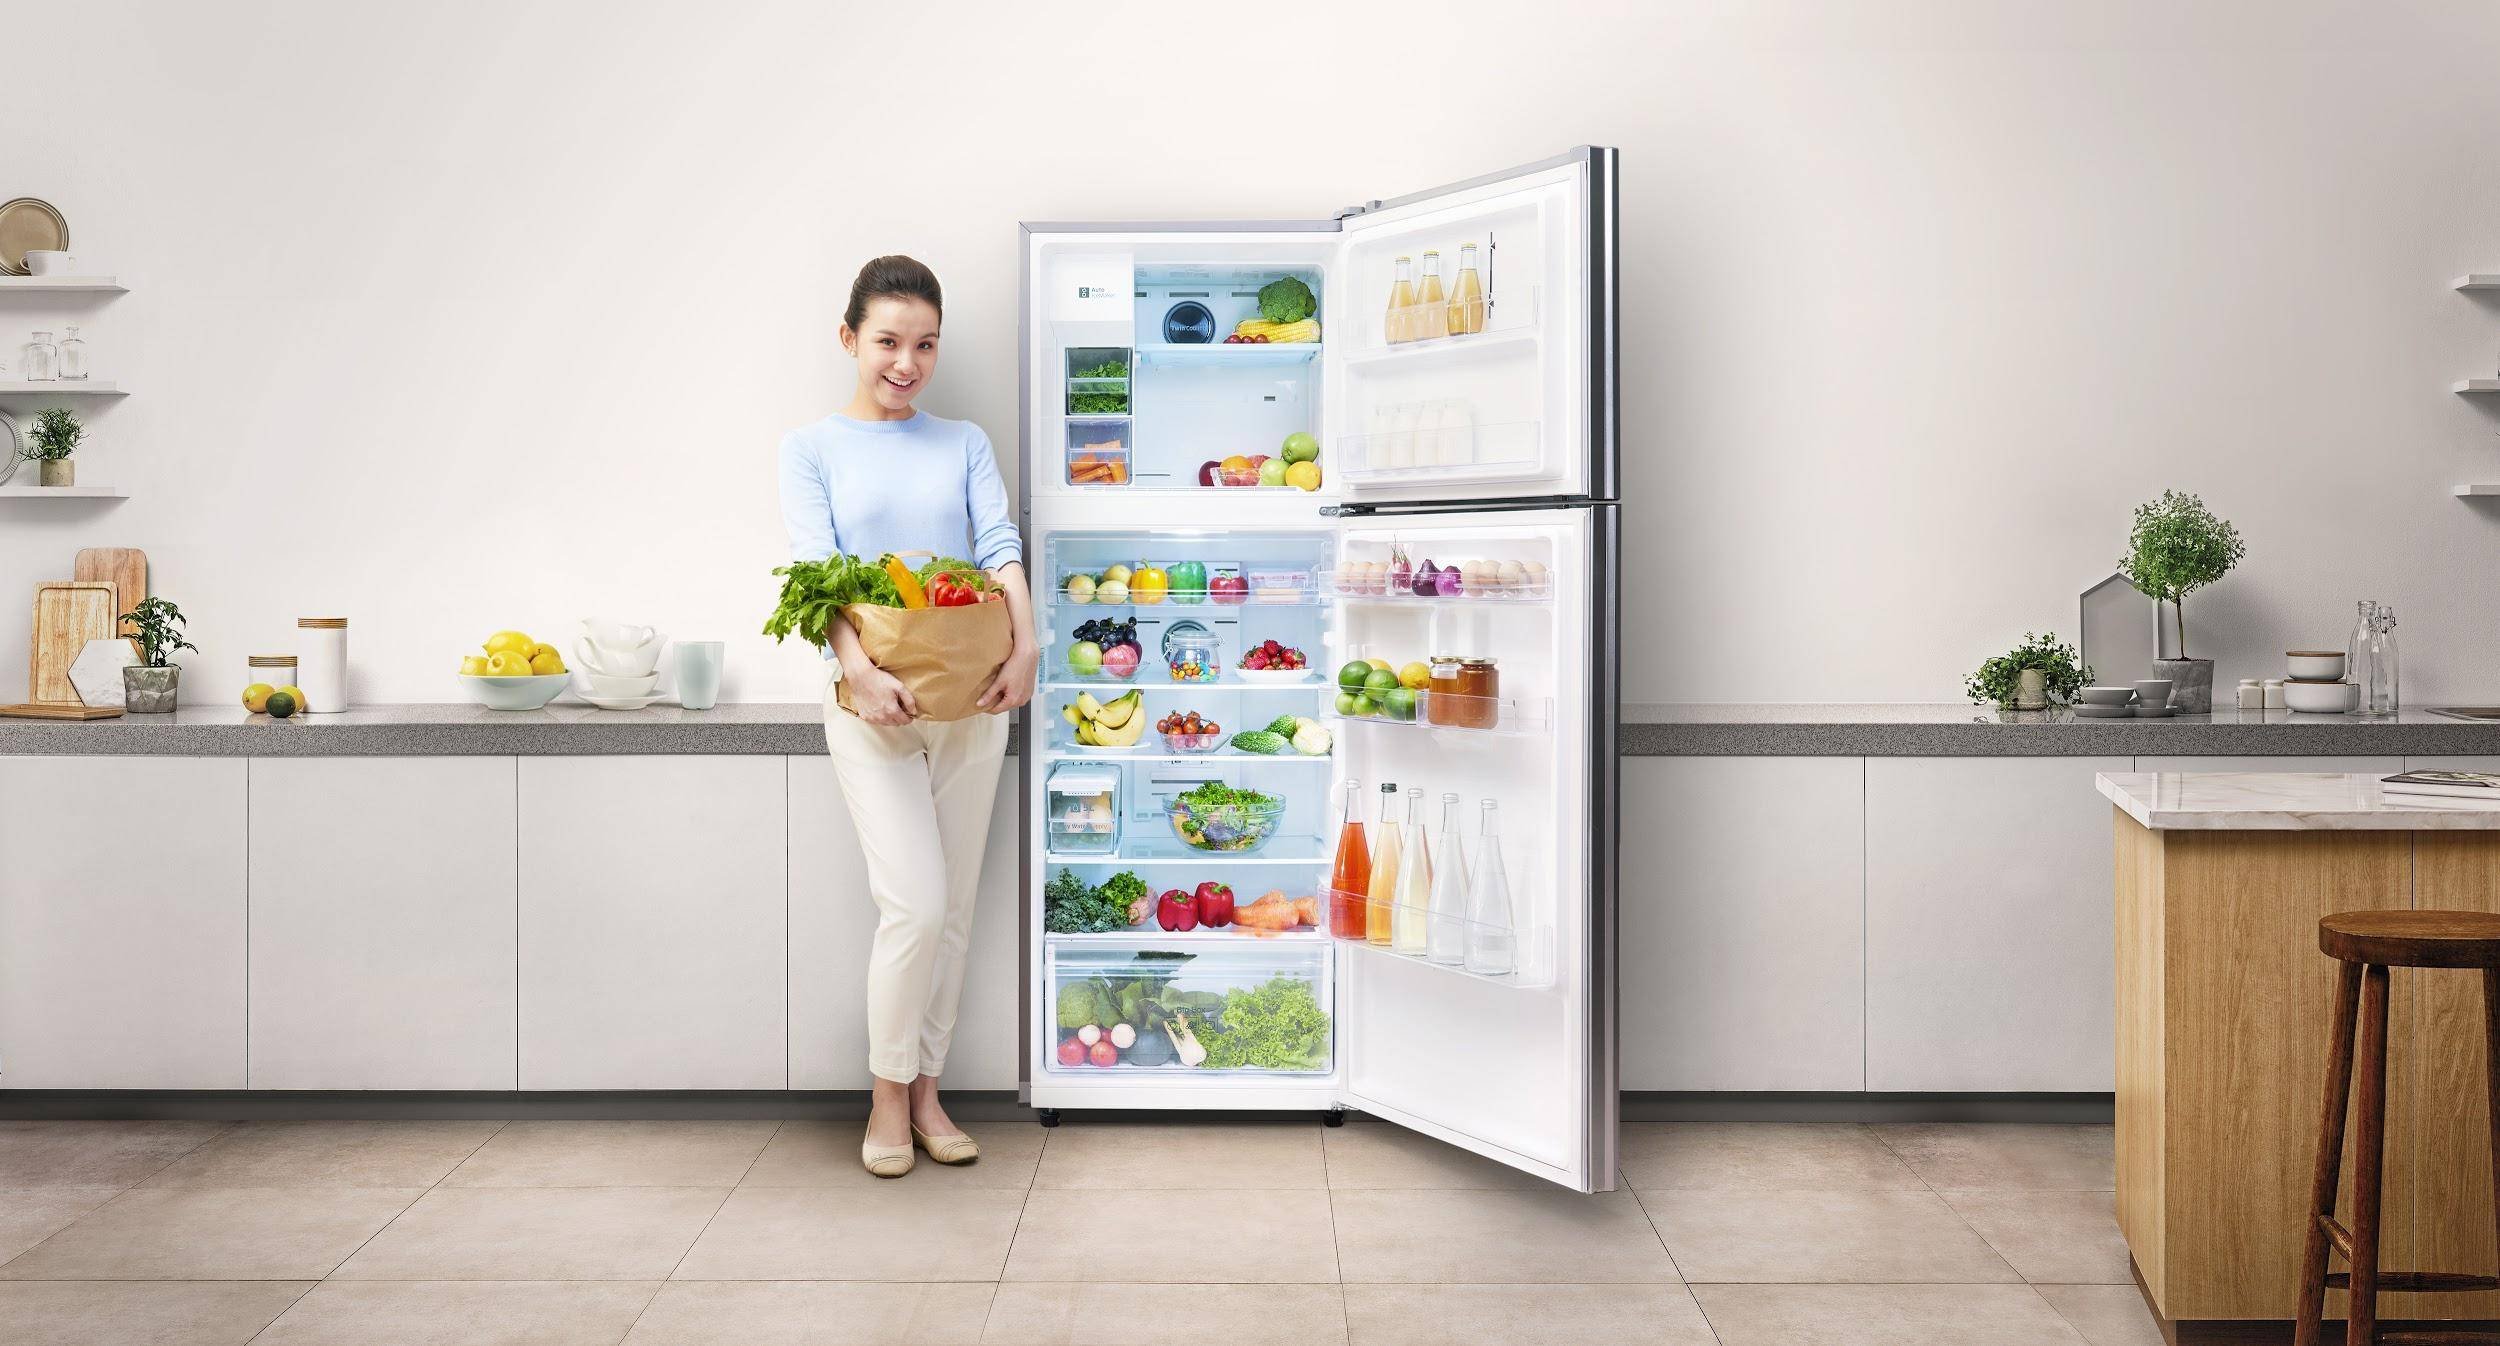 Холодильники аска. Холодильник Samsung rsh7unbp. Фон кухня холодильник. Реклама холодильника. Огромный холодильник для дома.